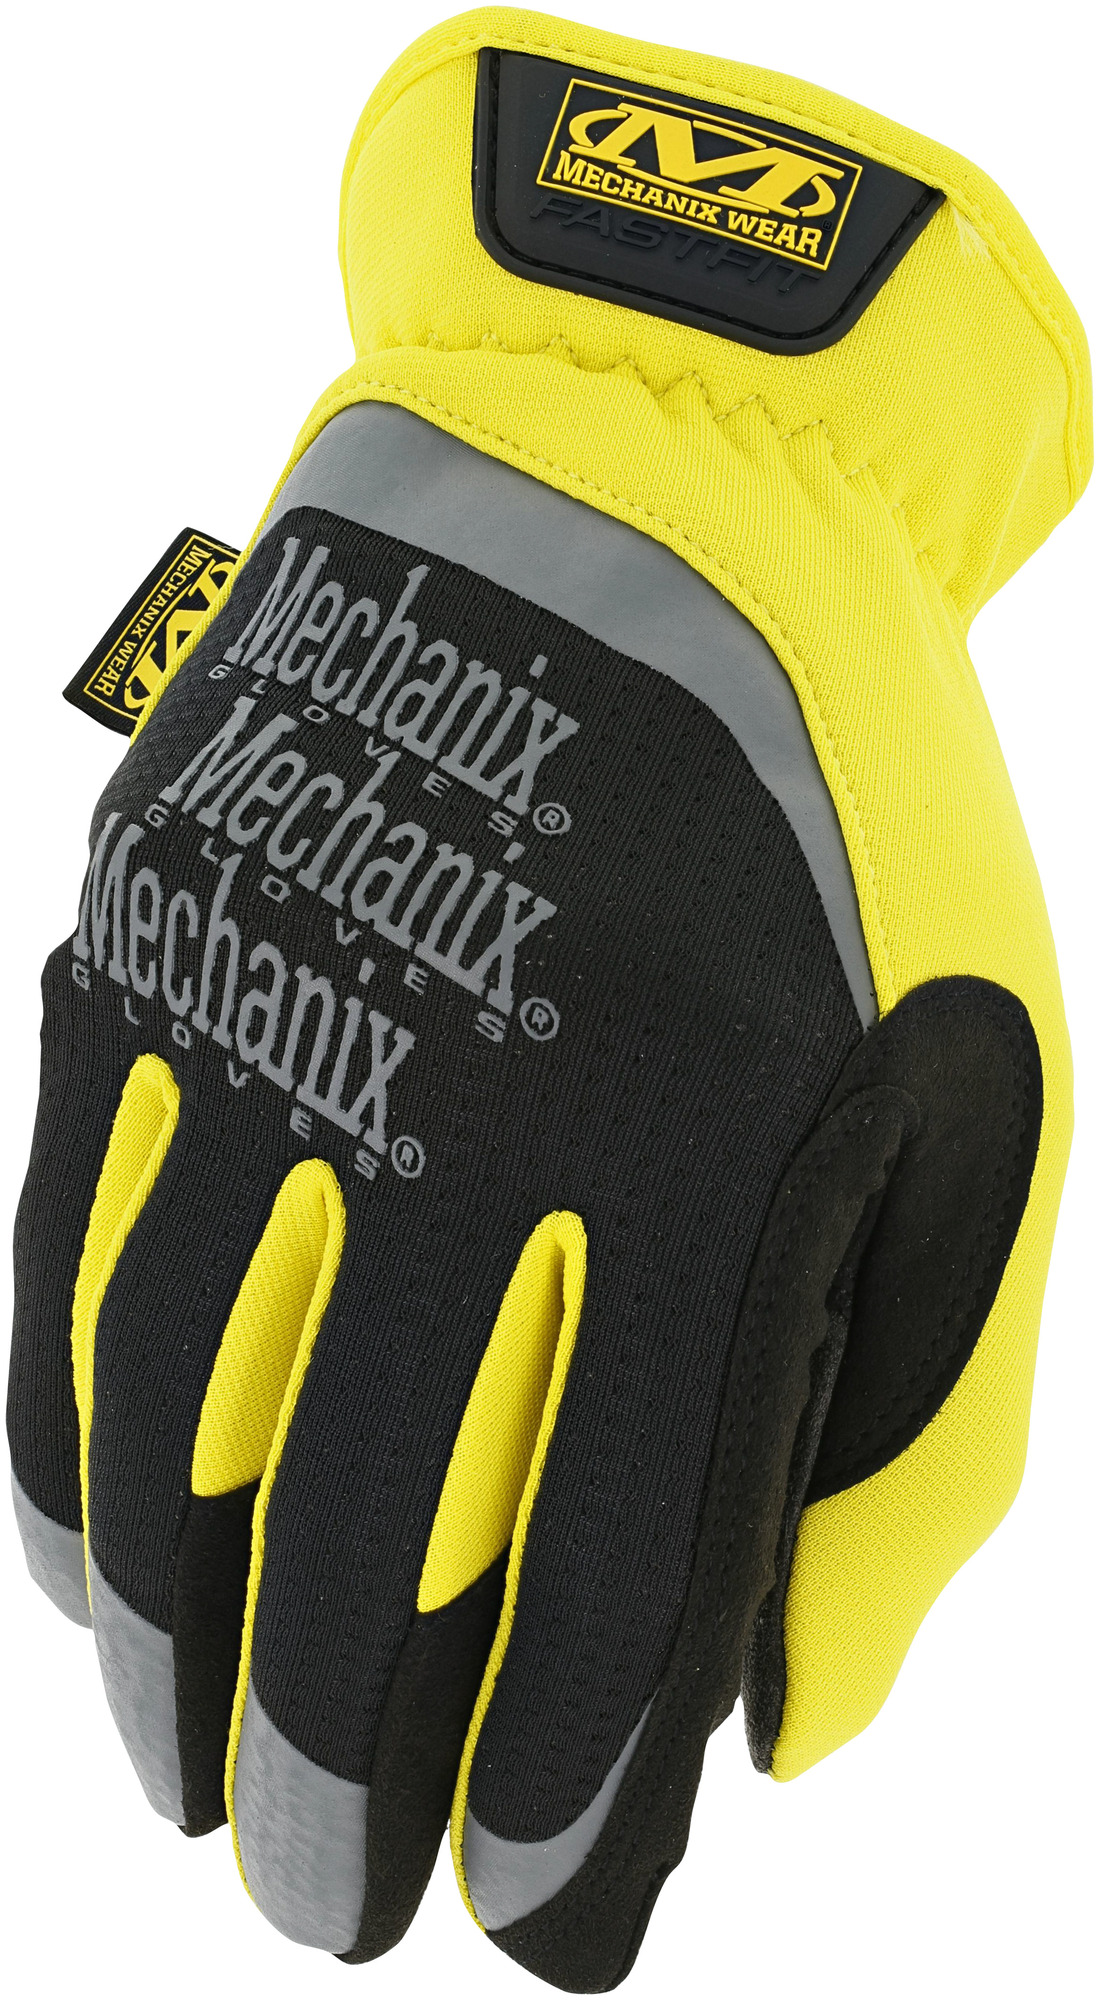 MECHANIX Pracovné rukavice so syntetickou kožou FastFit - žlté L/10